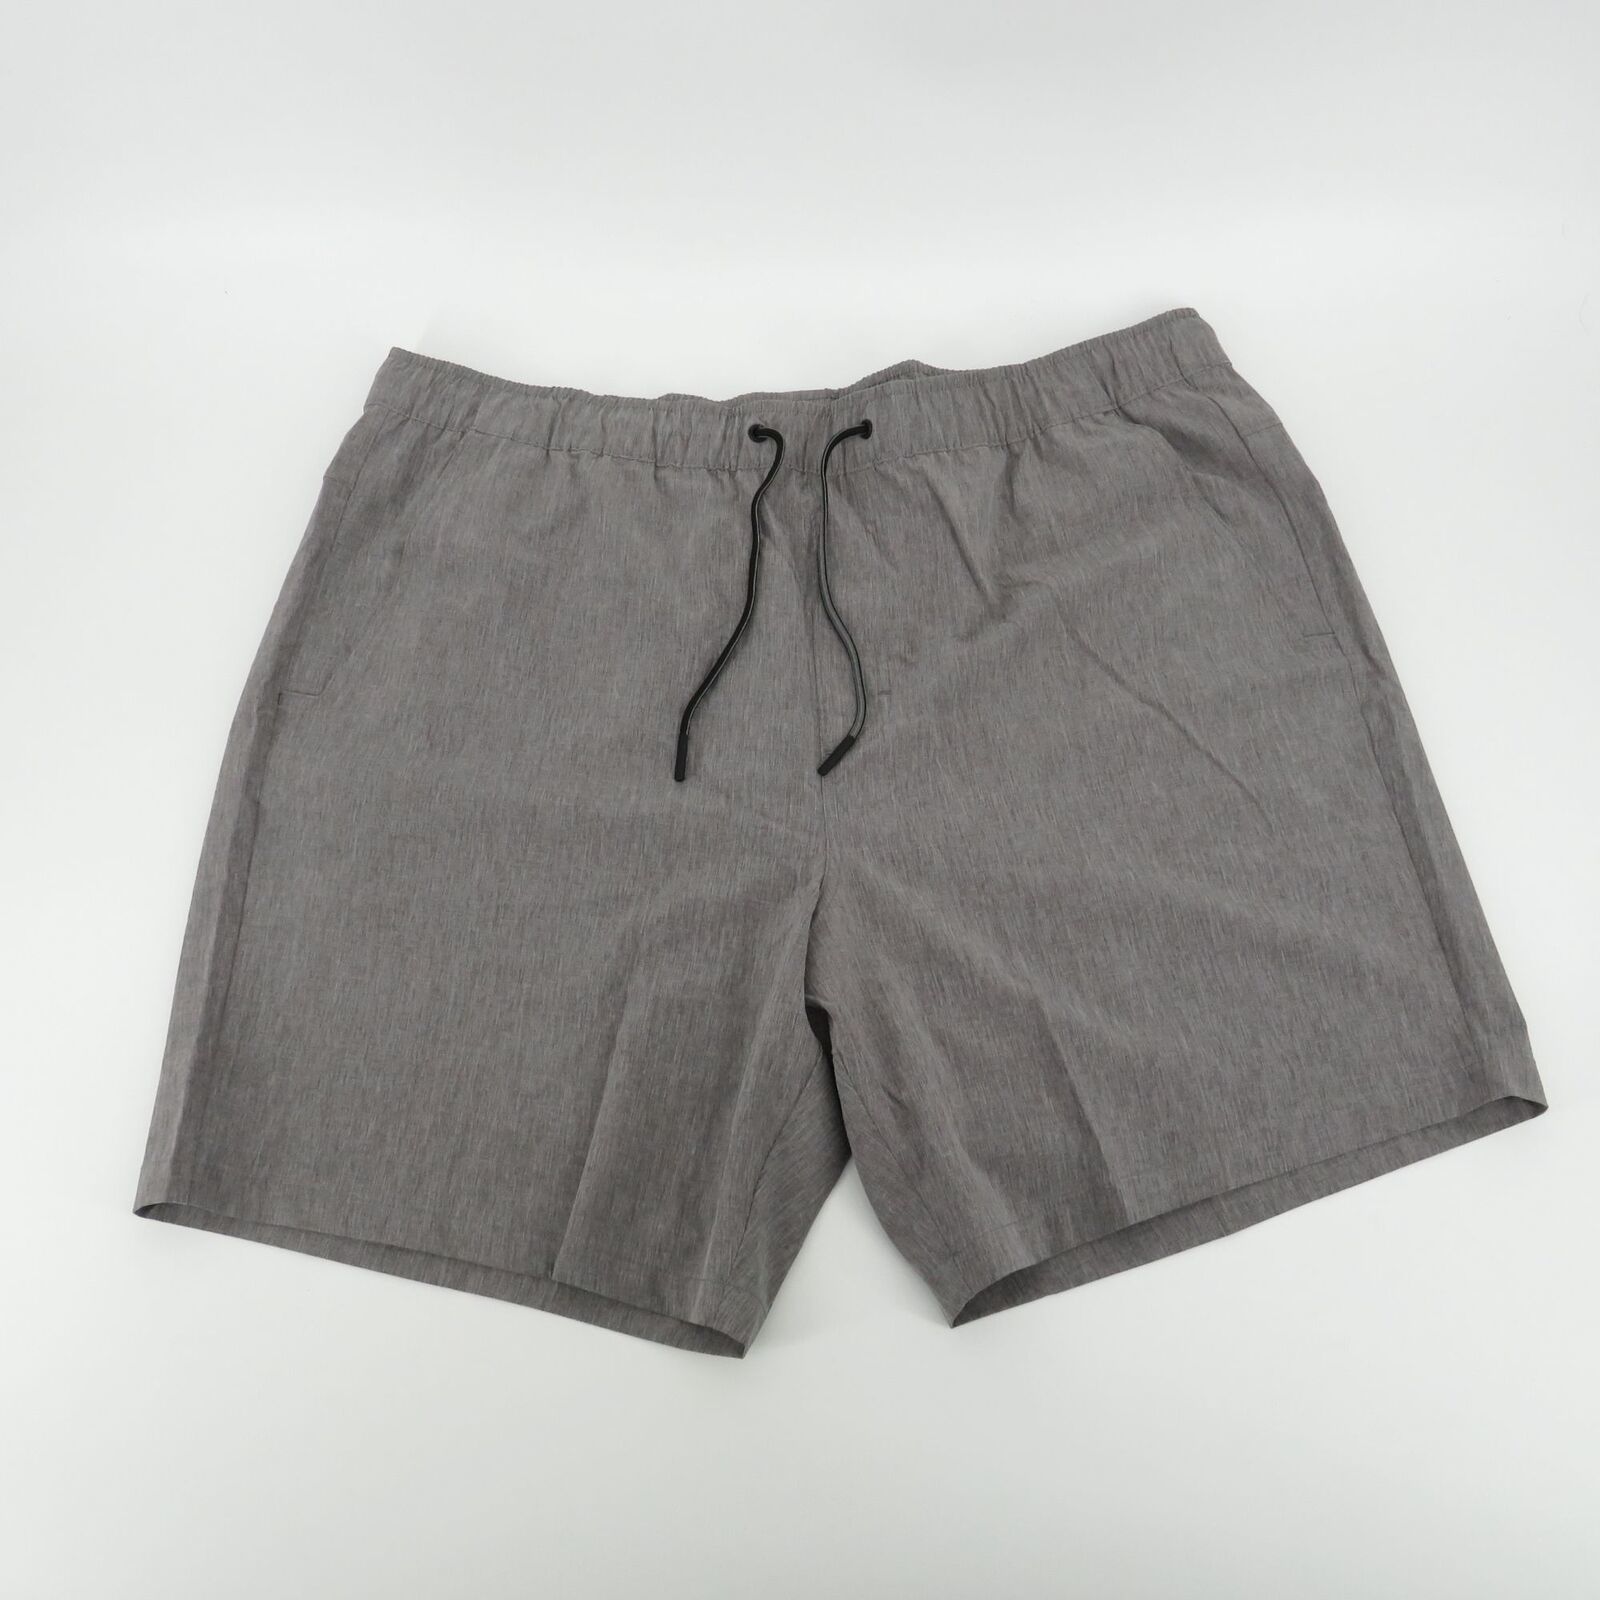 Eddie Bauer Men's Woven Tech Elastic Waist Gray Shorts XXL NWT $60 - $23.76